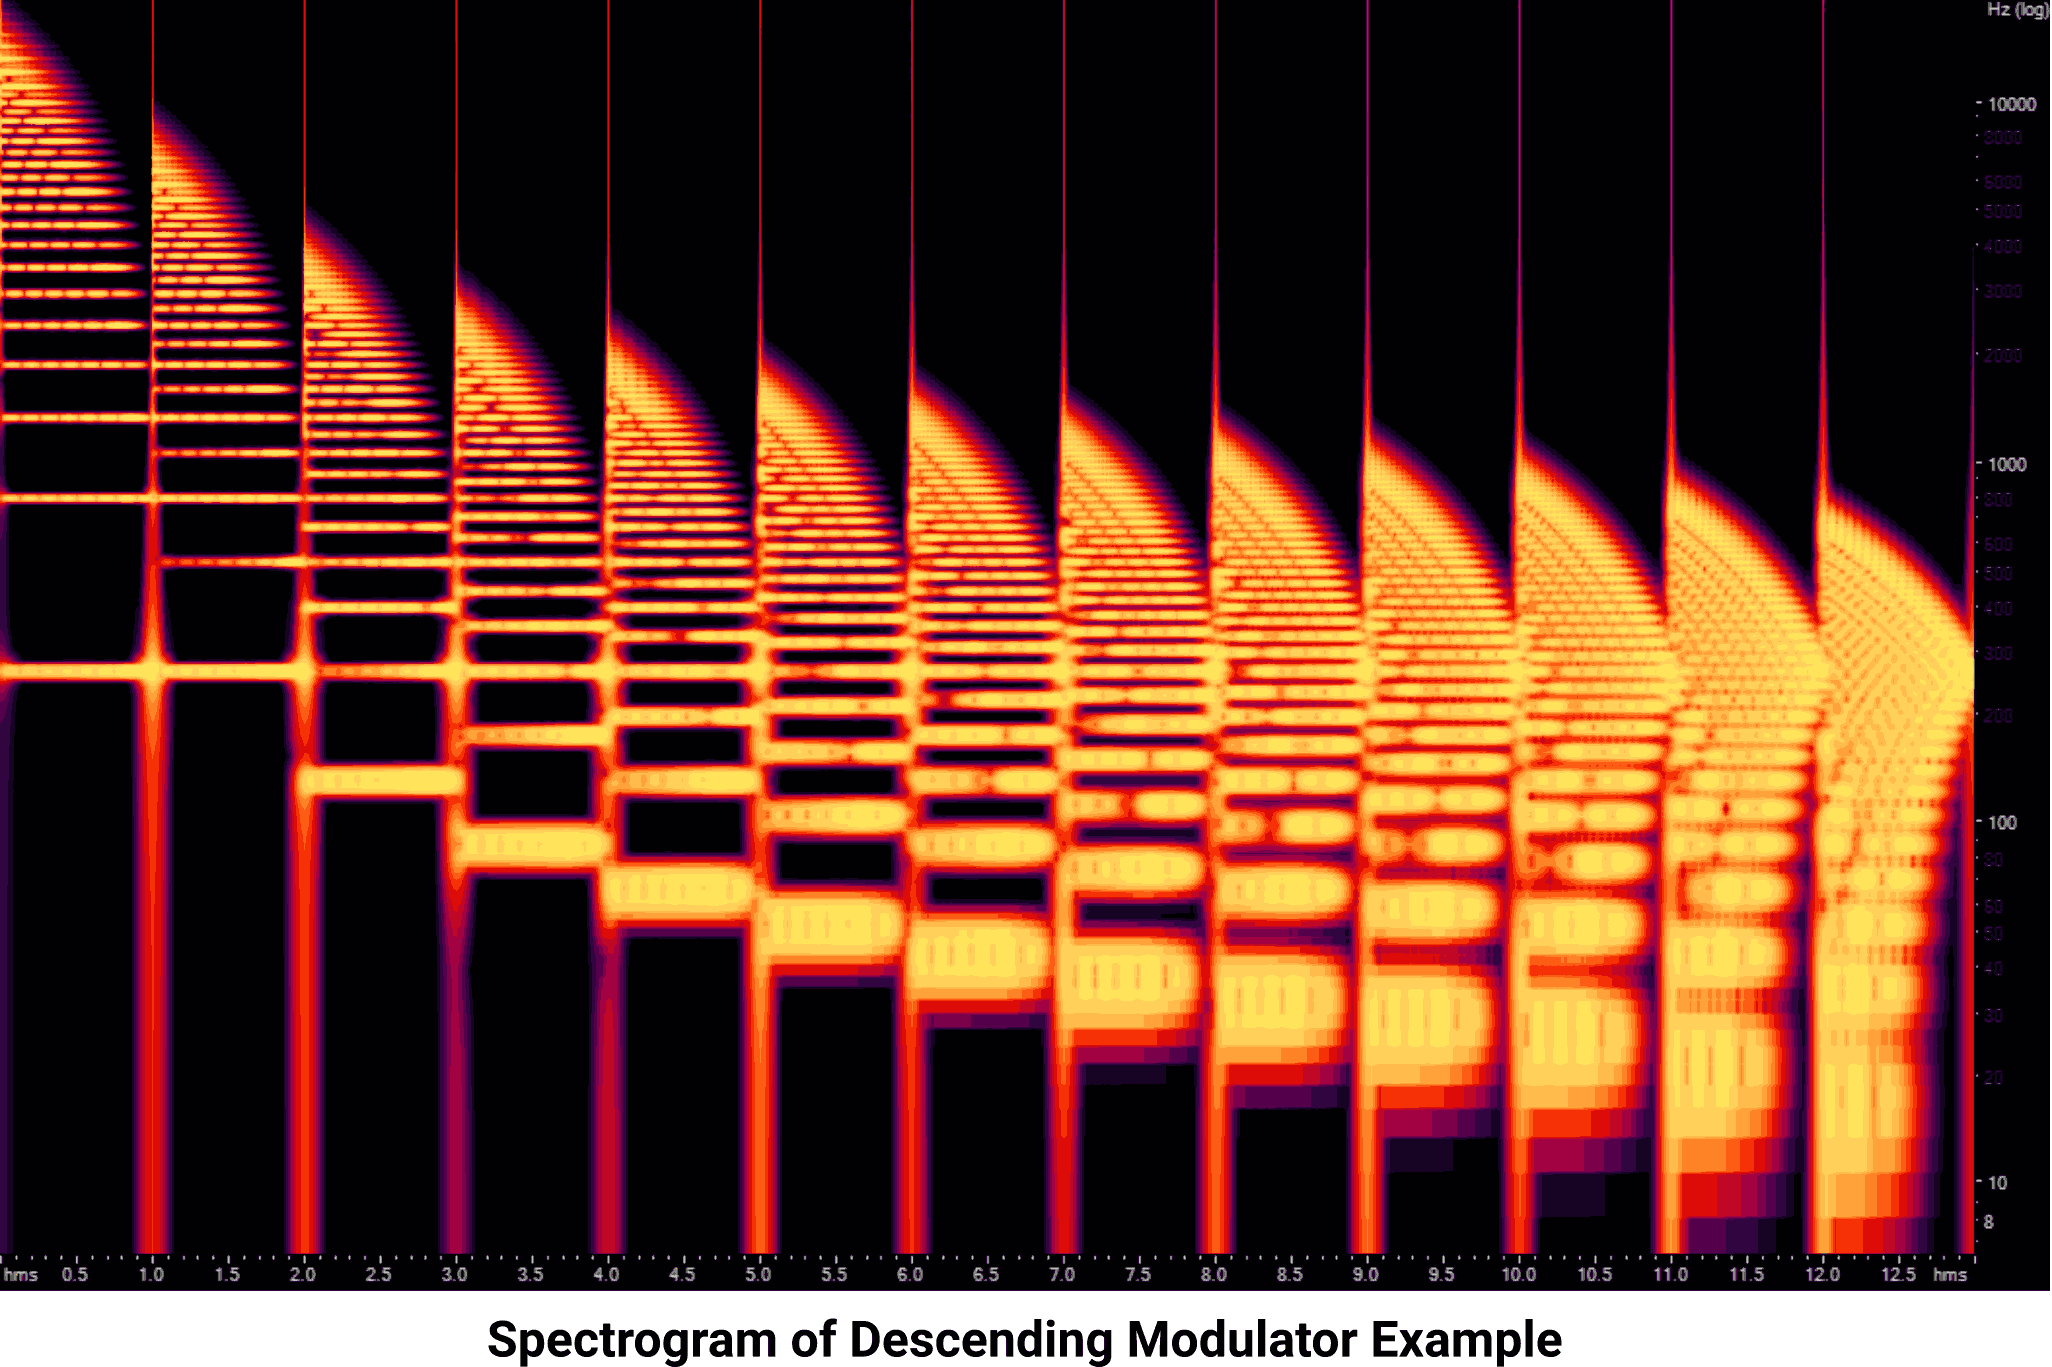 Spectrogram of the Descending Modulator example audio.